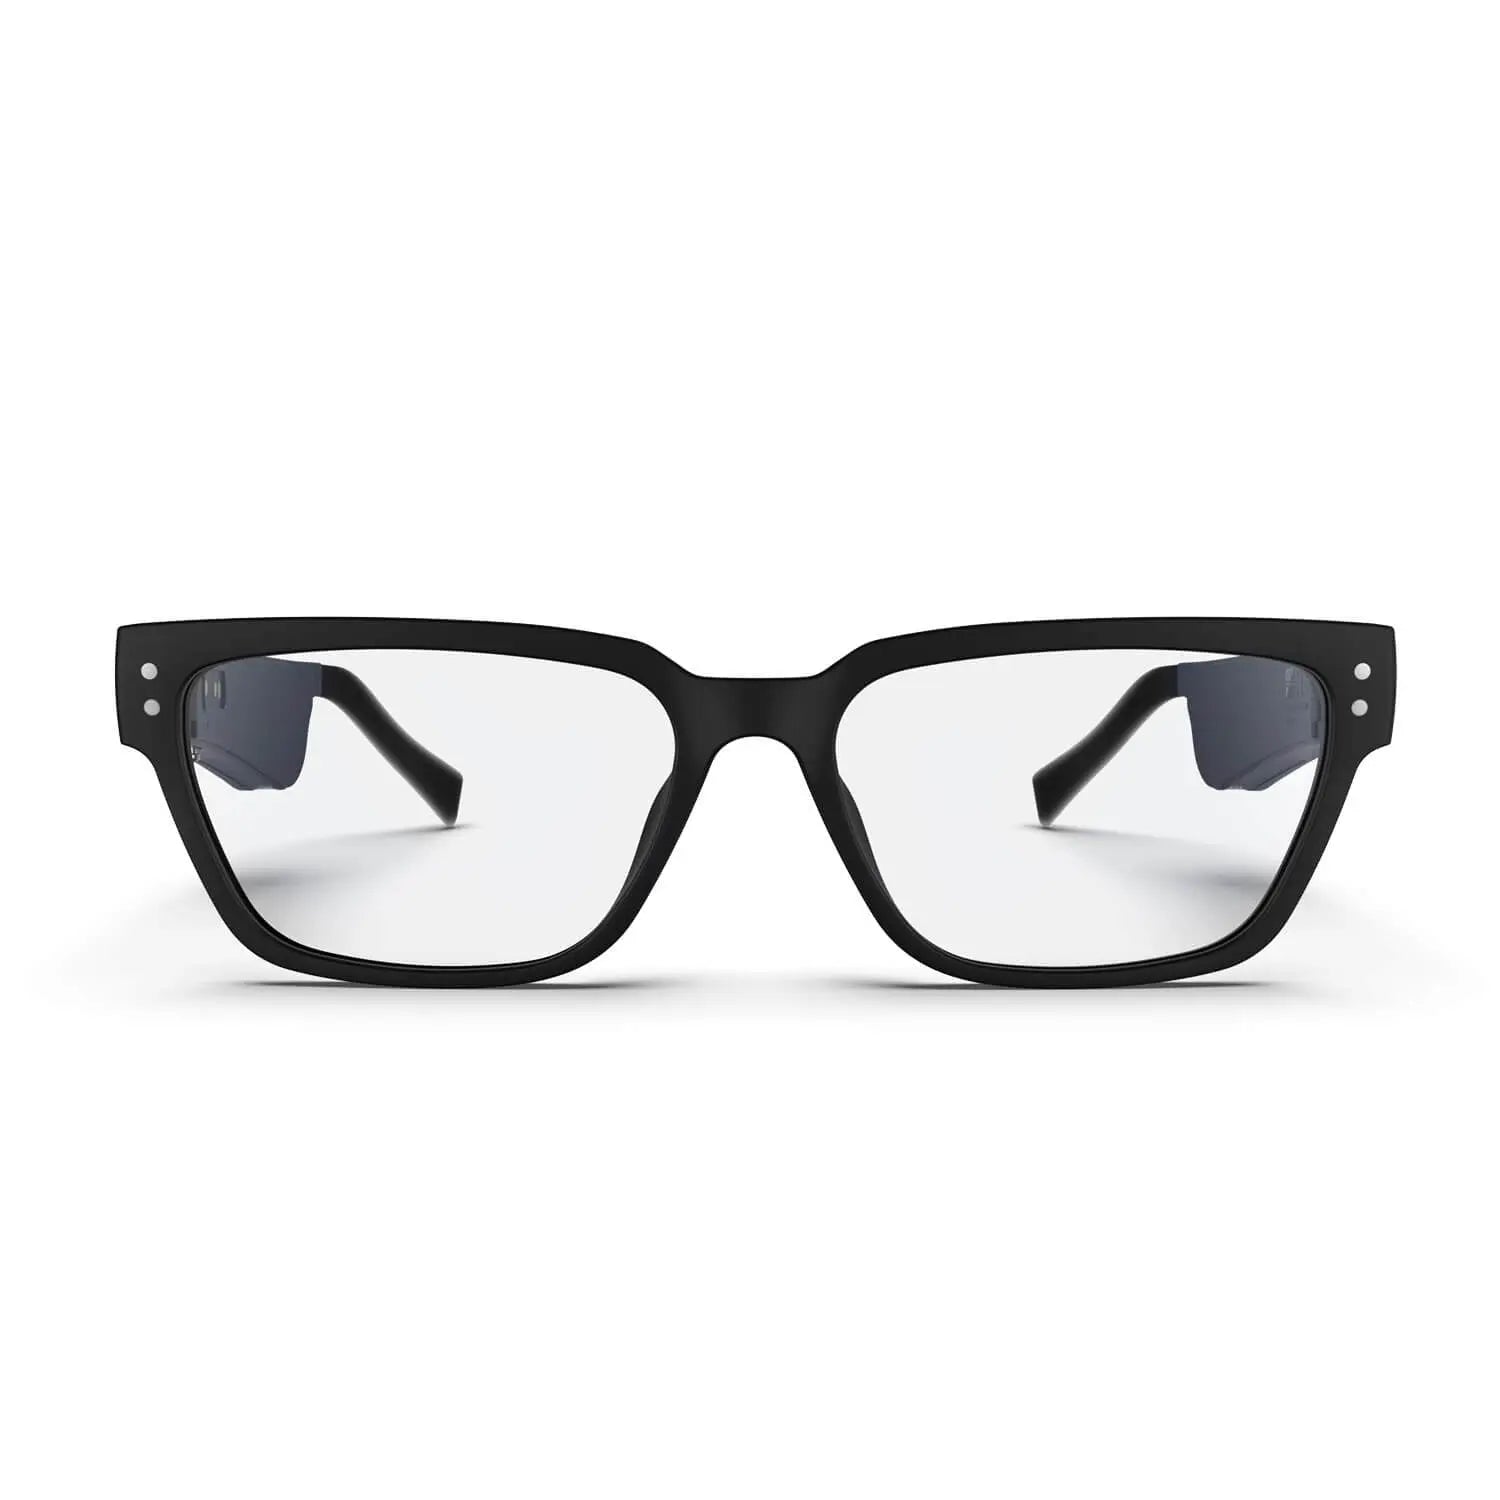 ROKiT Solos 2 Computer Eye Protection Glasses ROKiT EYE Q - solos